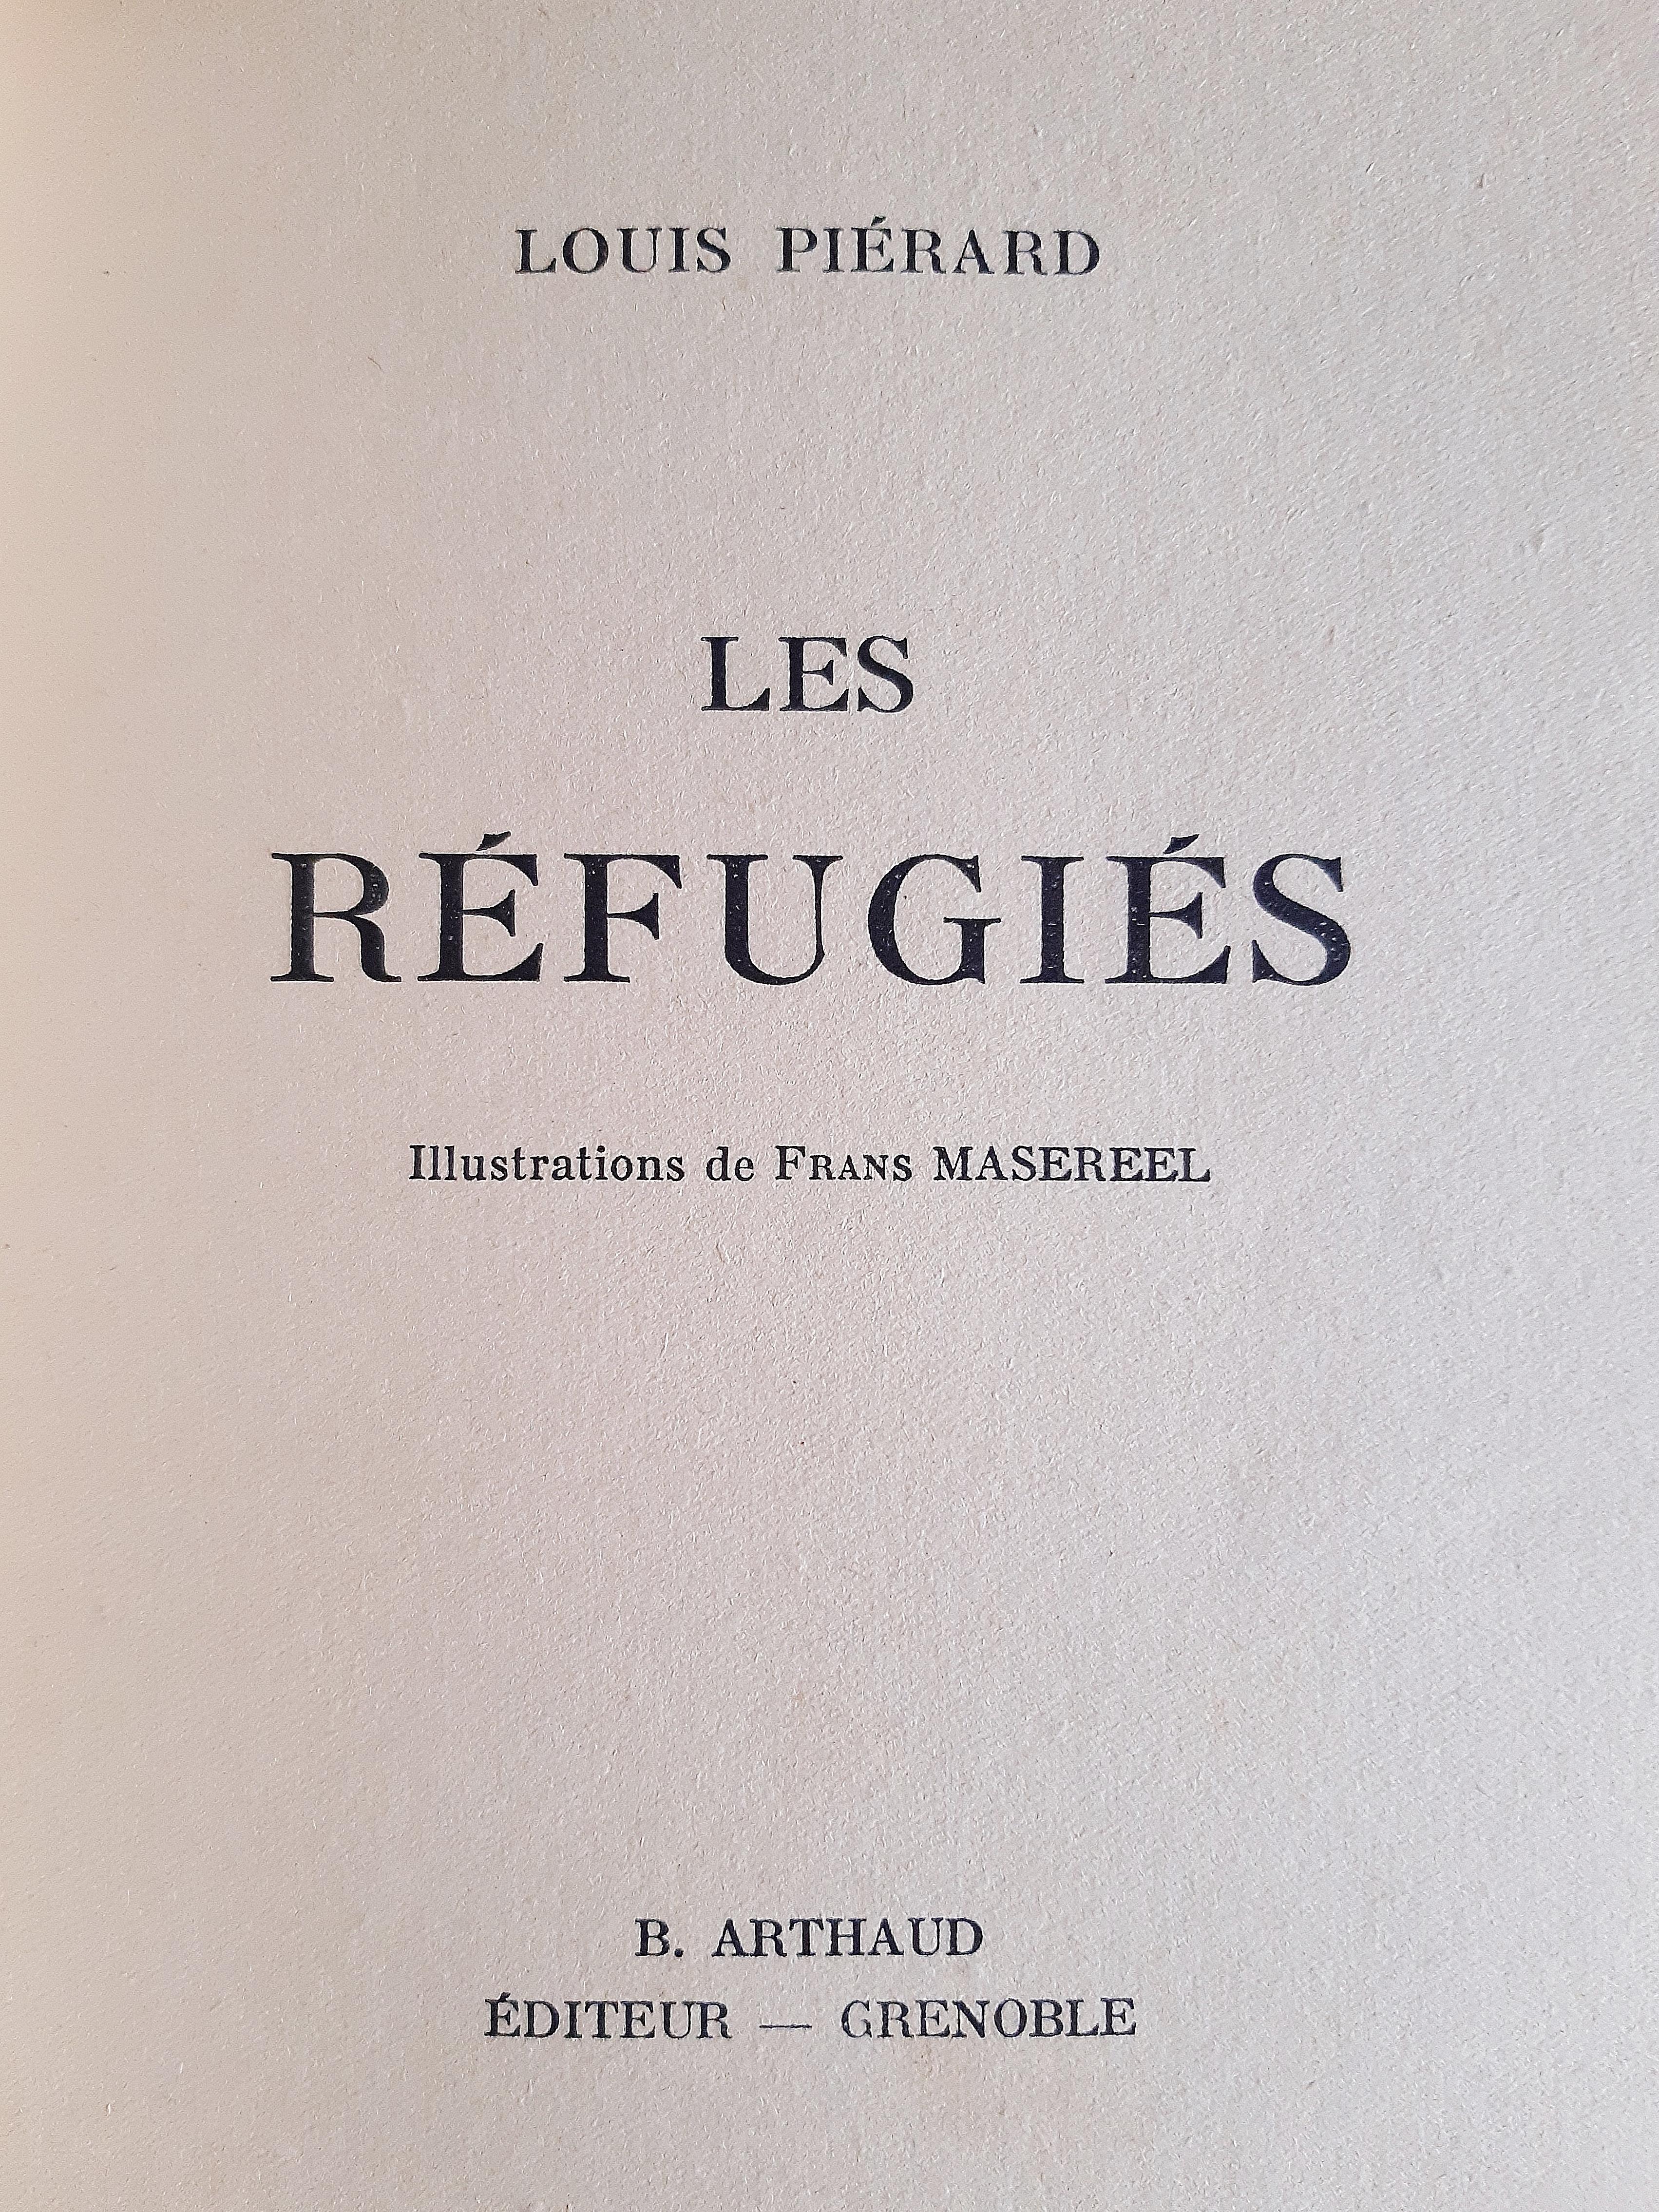 Les Réfugiés - Rare Book illustrated by André Masson - 1942 For Sale 2